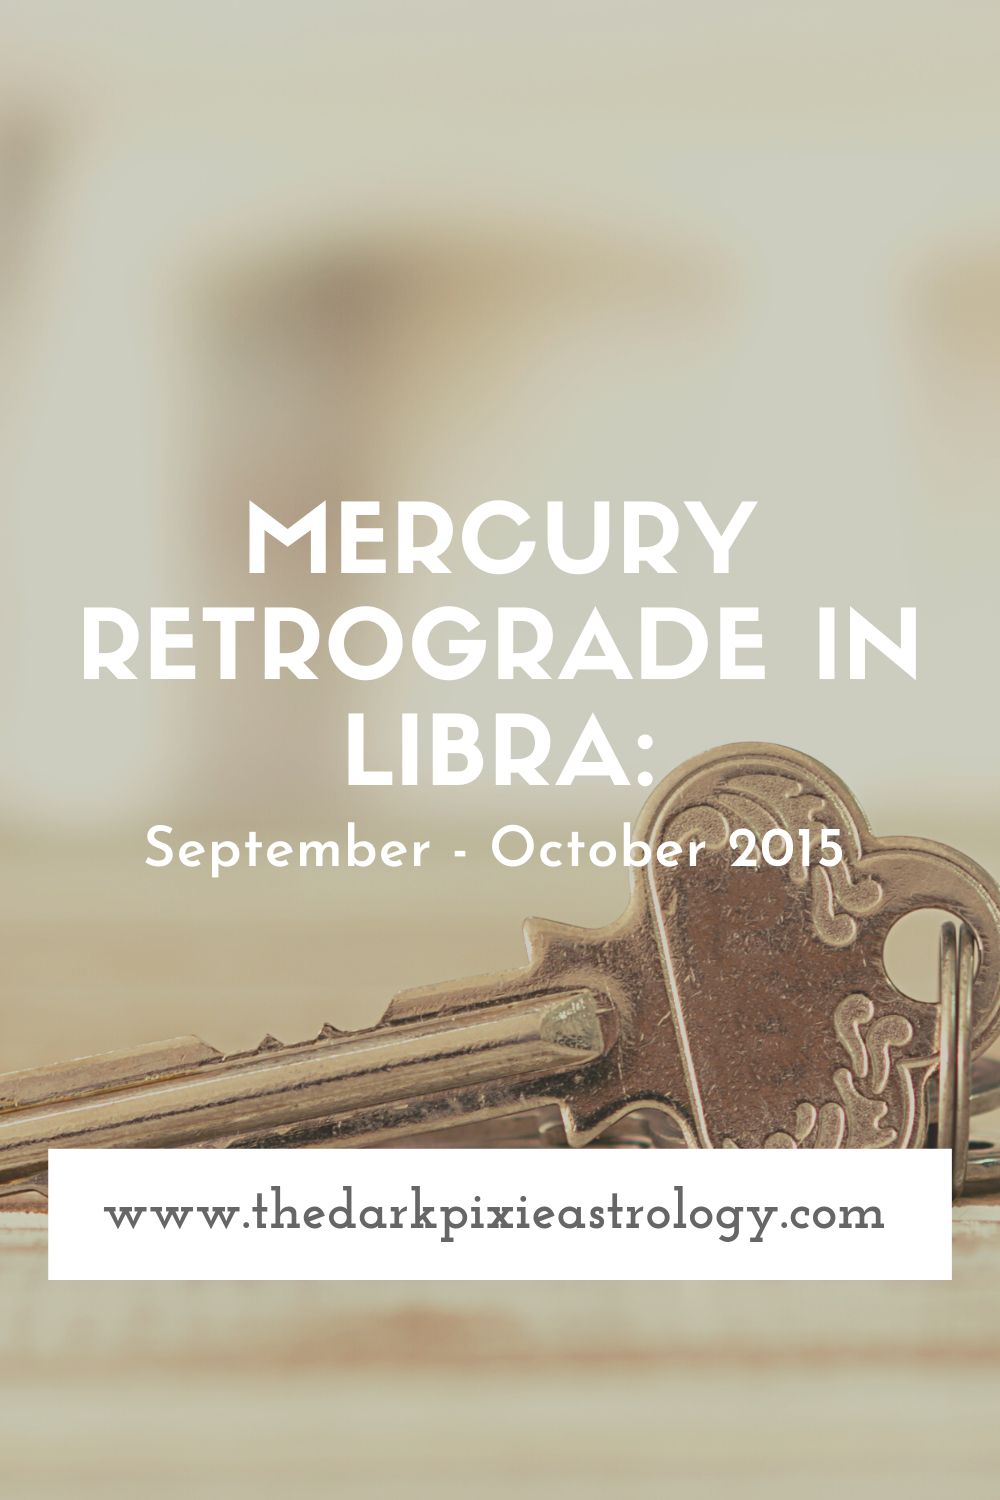 Mercury Retrograde in Libra: September - October 2015 - The Dark Pixie Astrology